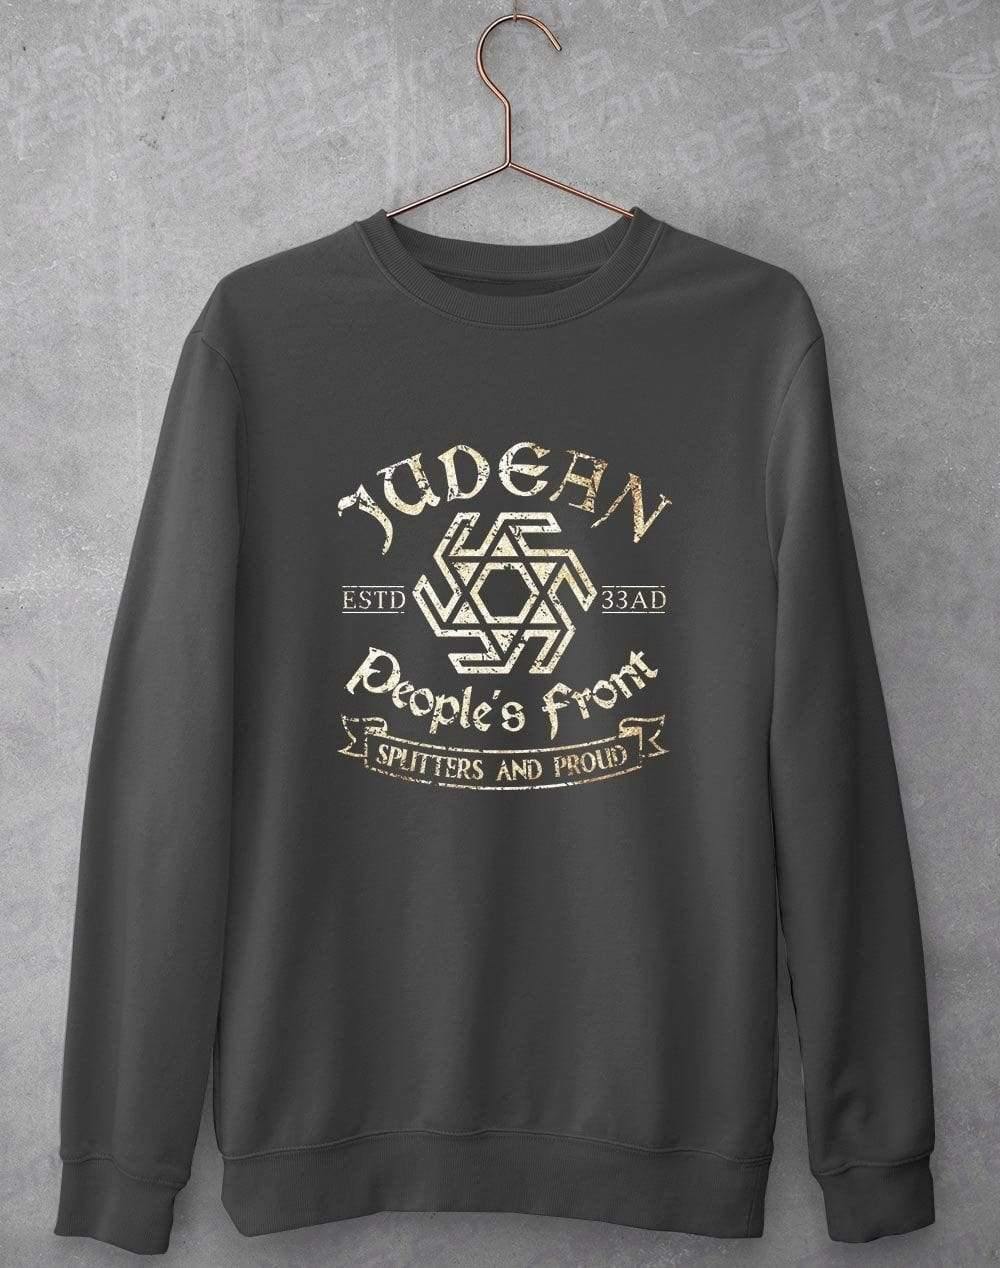 Judean Peoples Front Sweatshirt S / Charcoal  - Off World Tees